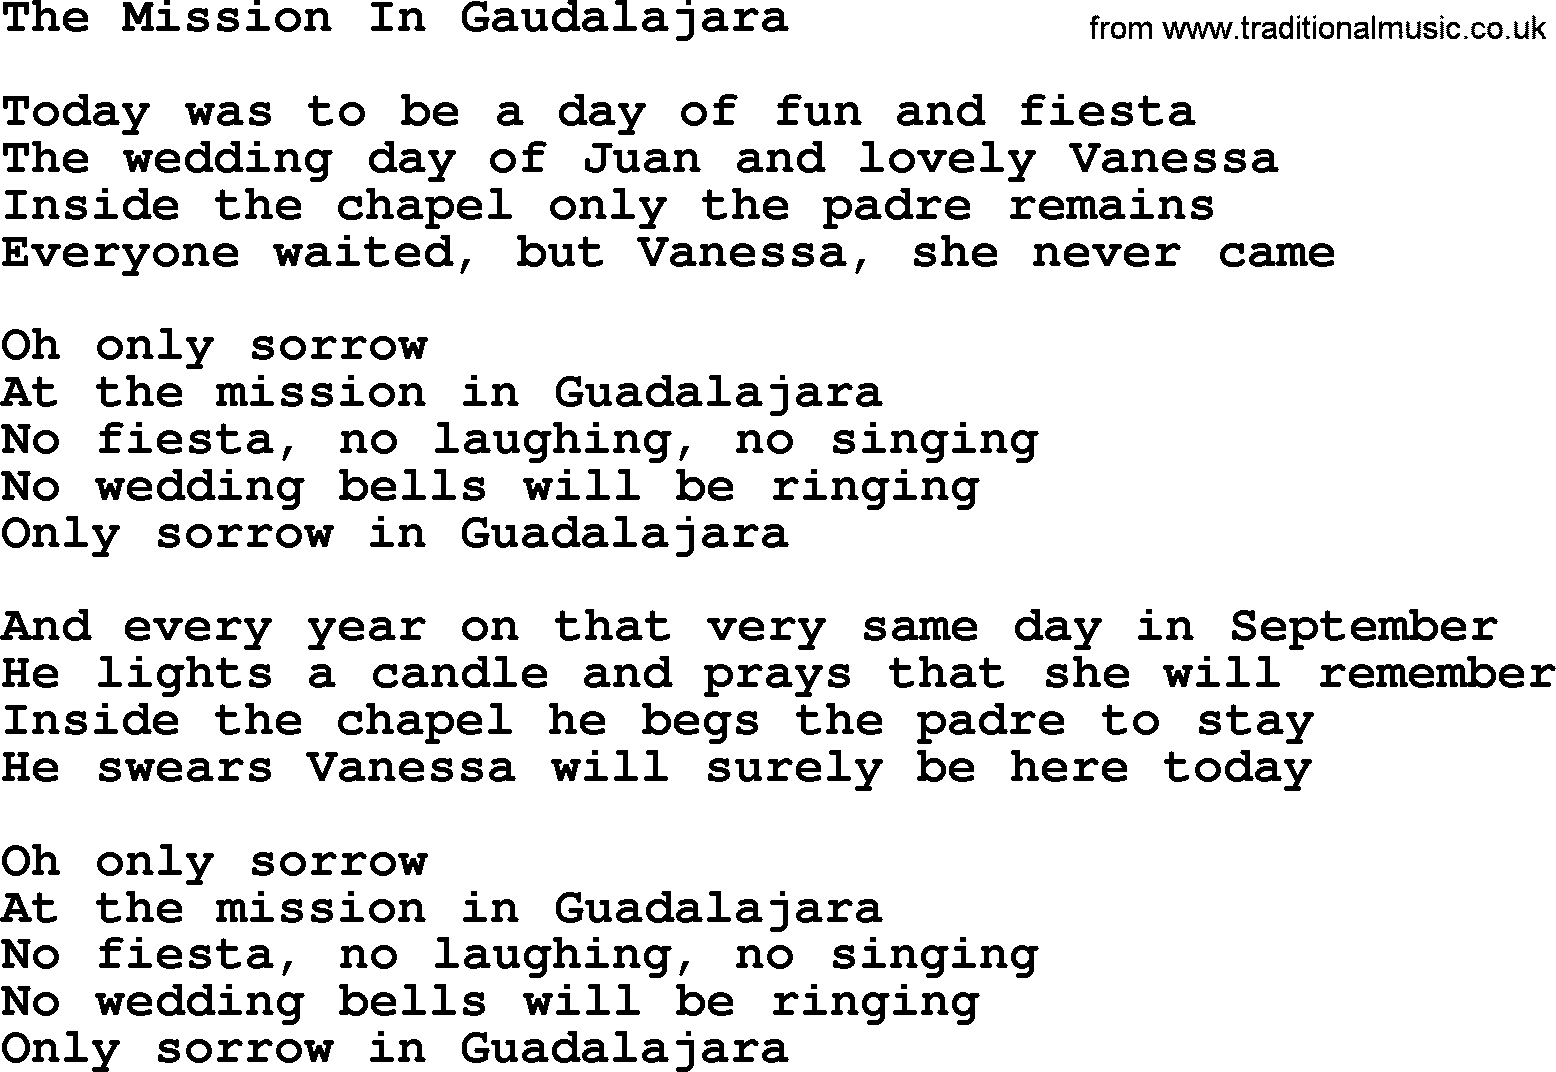 Marty Robbins song: The Mission In Gaudalajara, lyrics